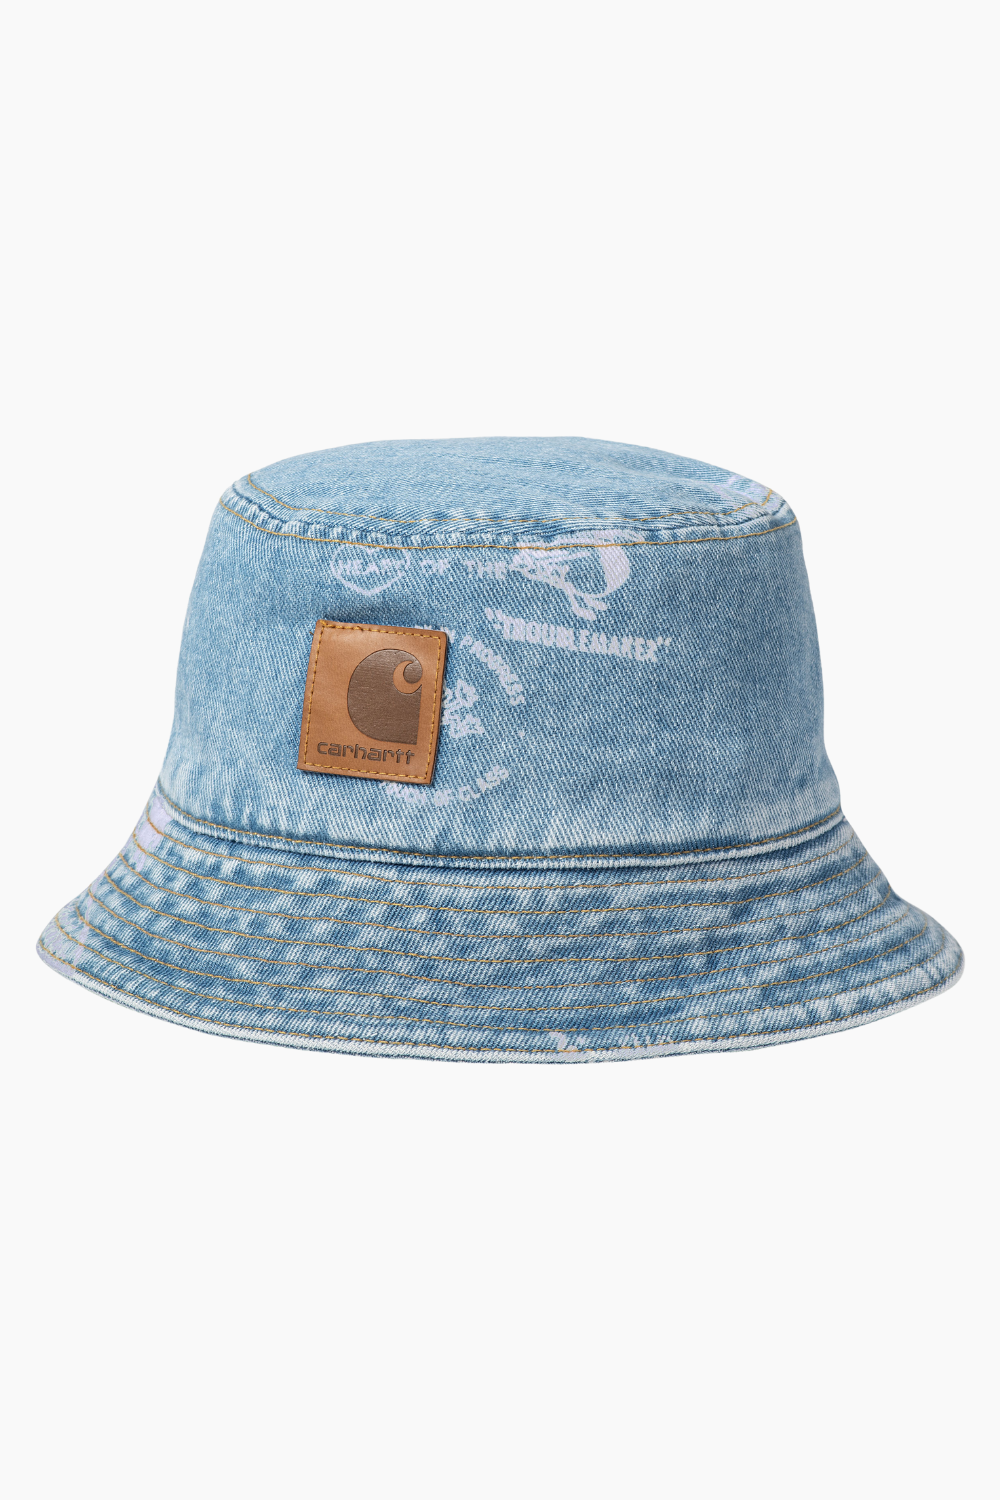 Stamp Bucket Hat - Stamp Print (Blue Bleached) - Carhartt WIP - Blå S/M